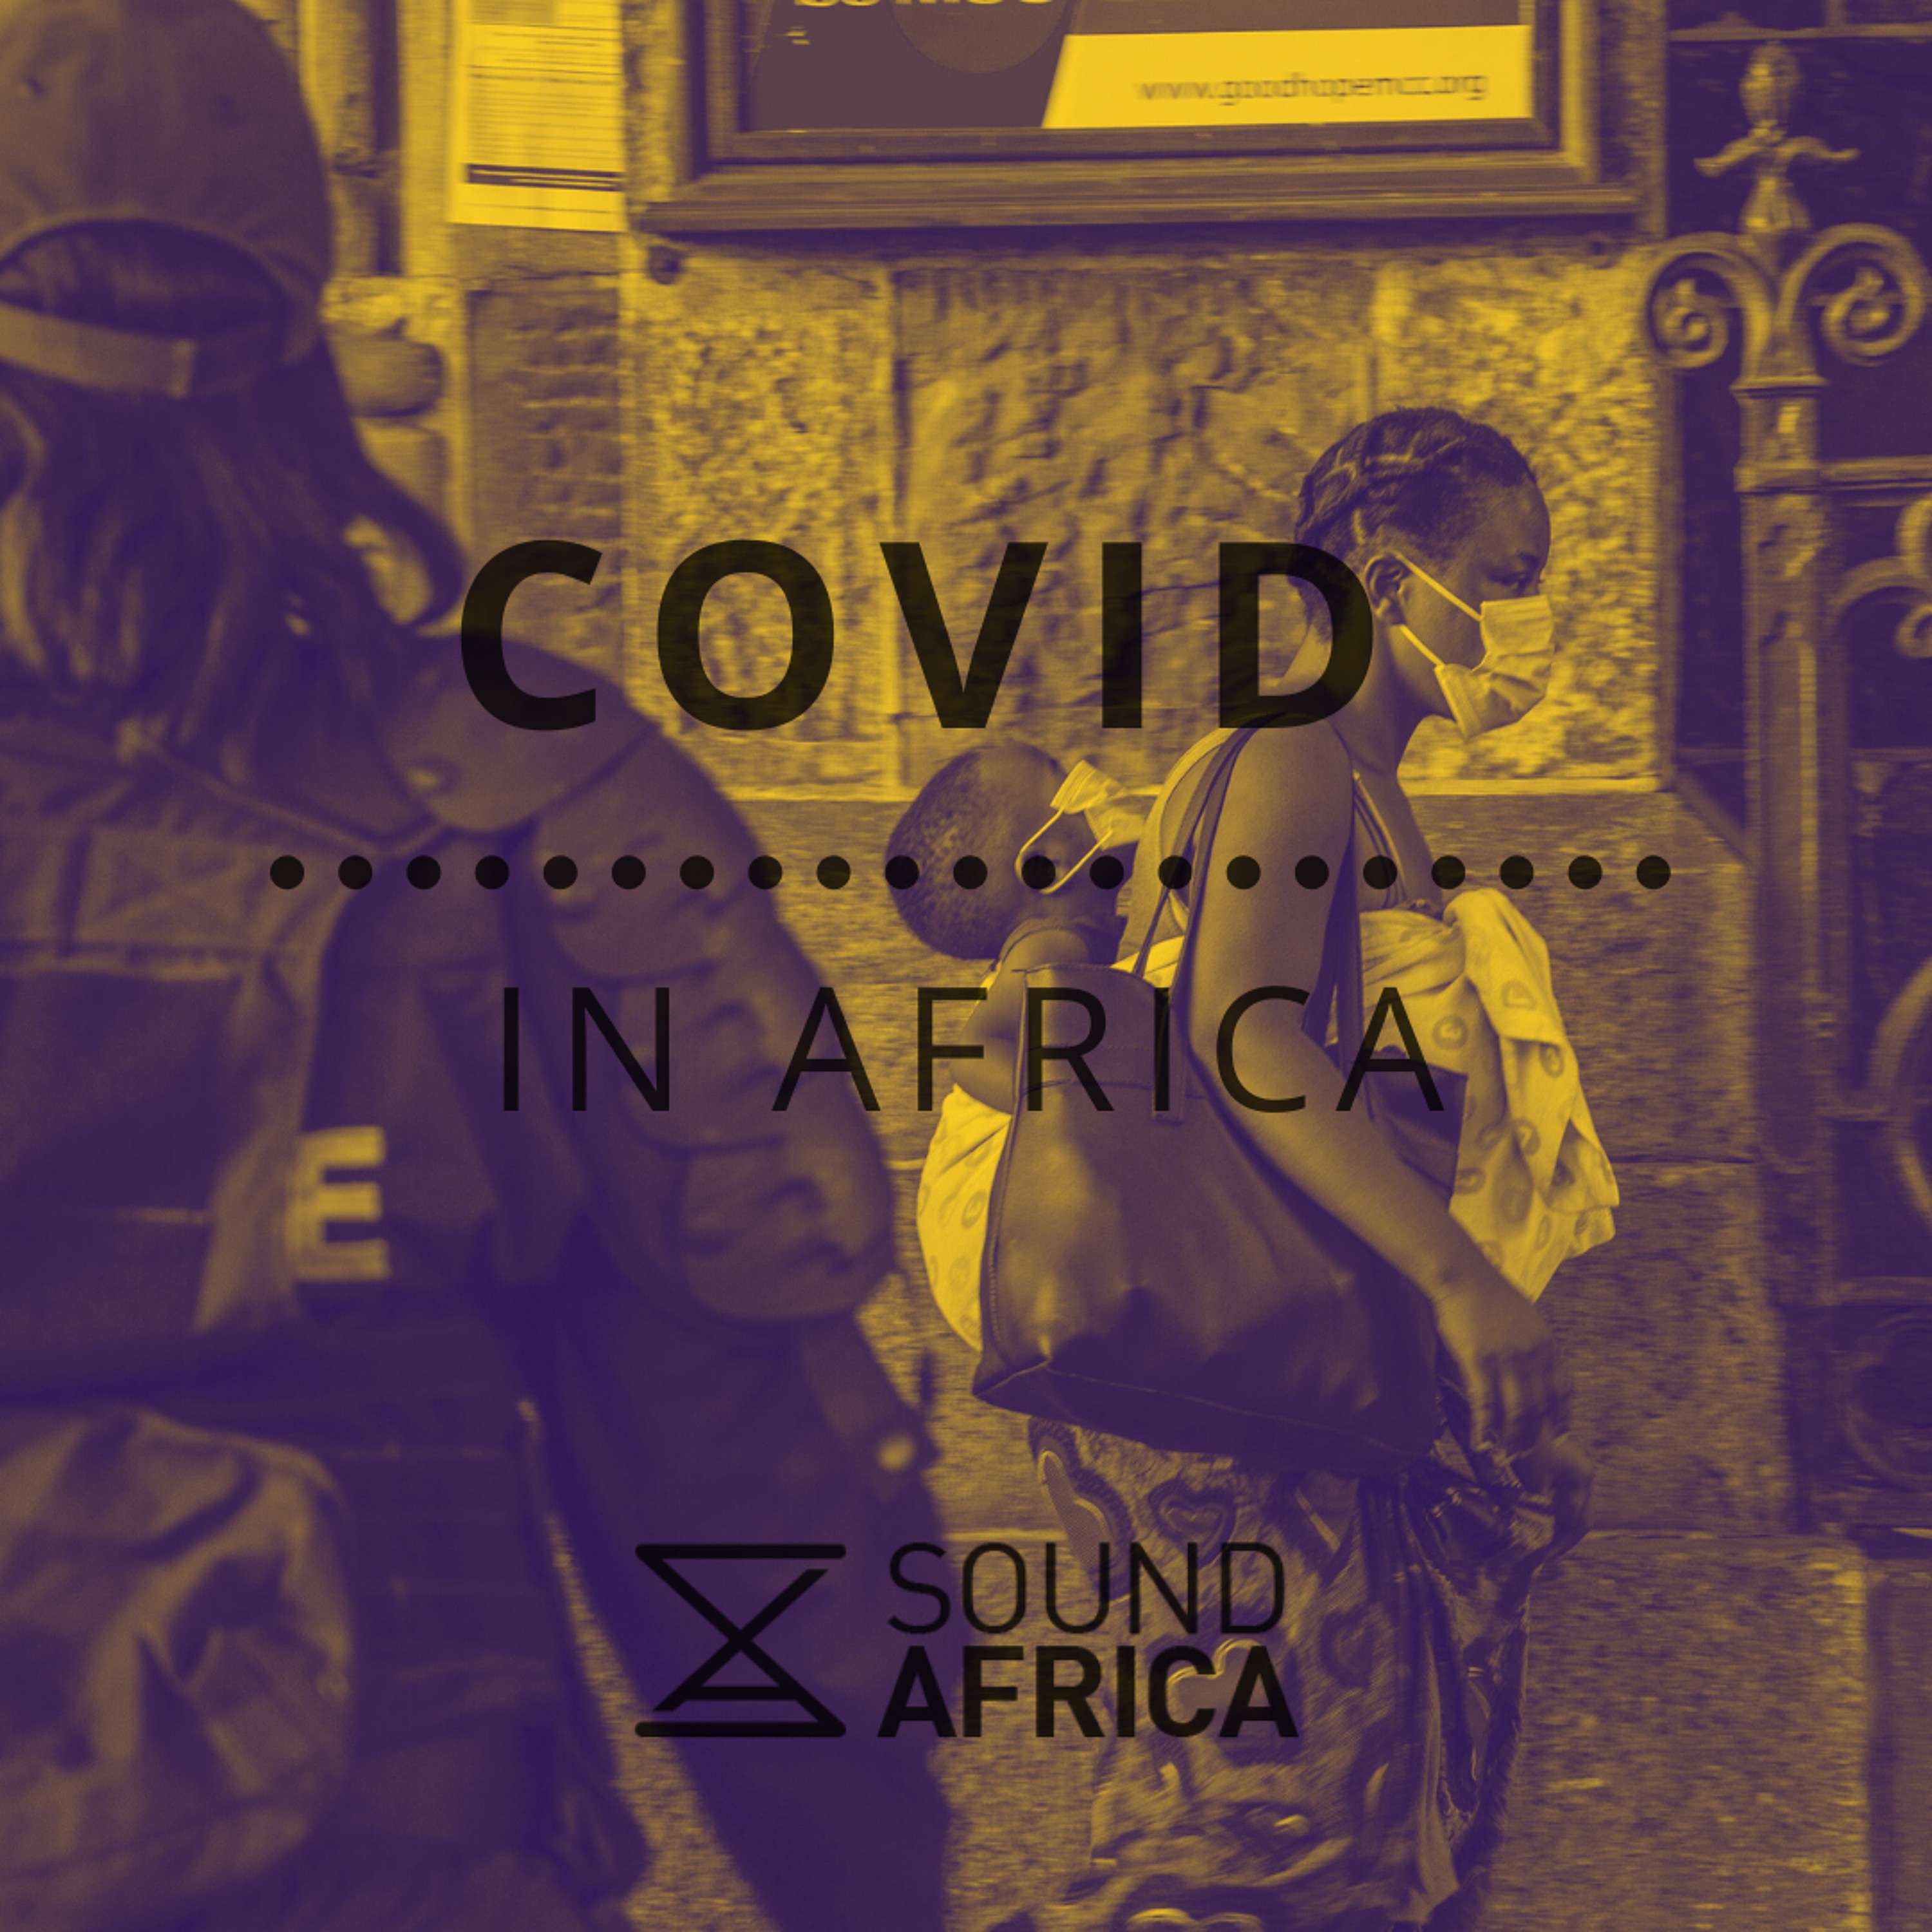 Covid in Africa - Episode 4